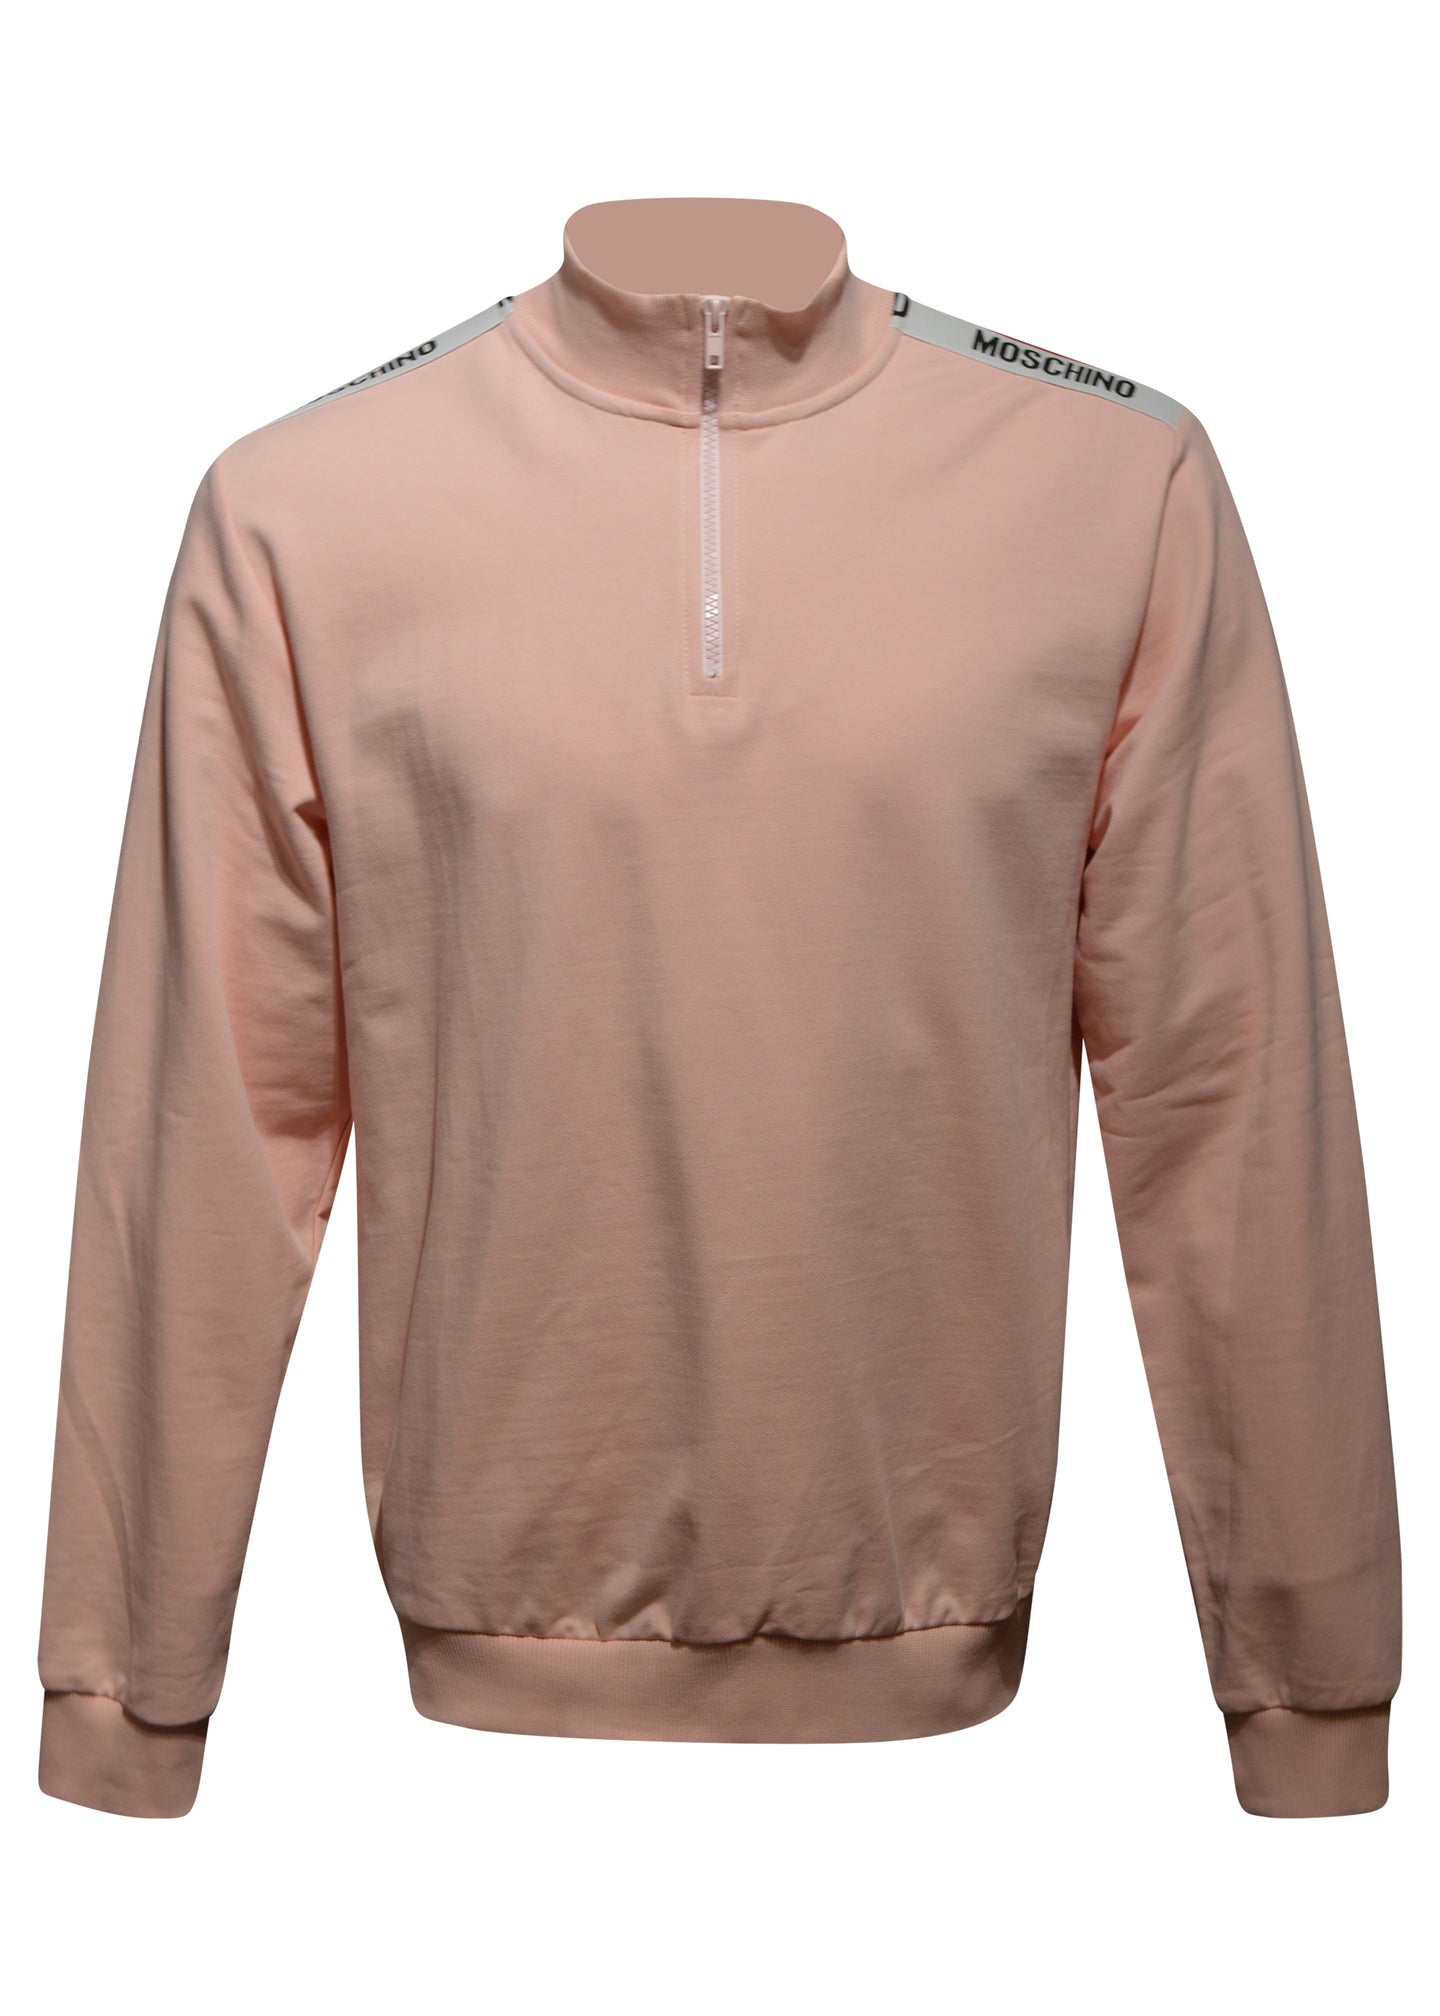 Moschino - Quarter Zip Funnel Neck Tape Detail On Shoulders Sweatshirt - 300016 - Pink